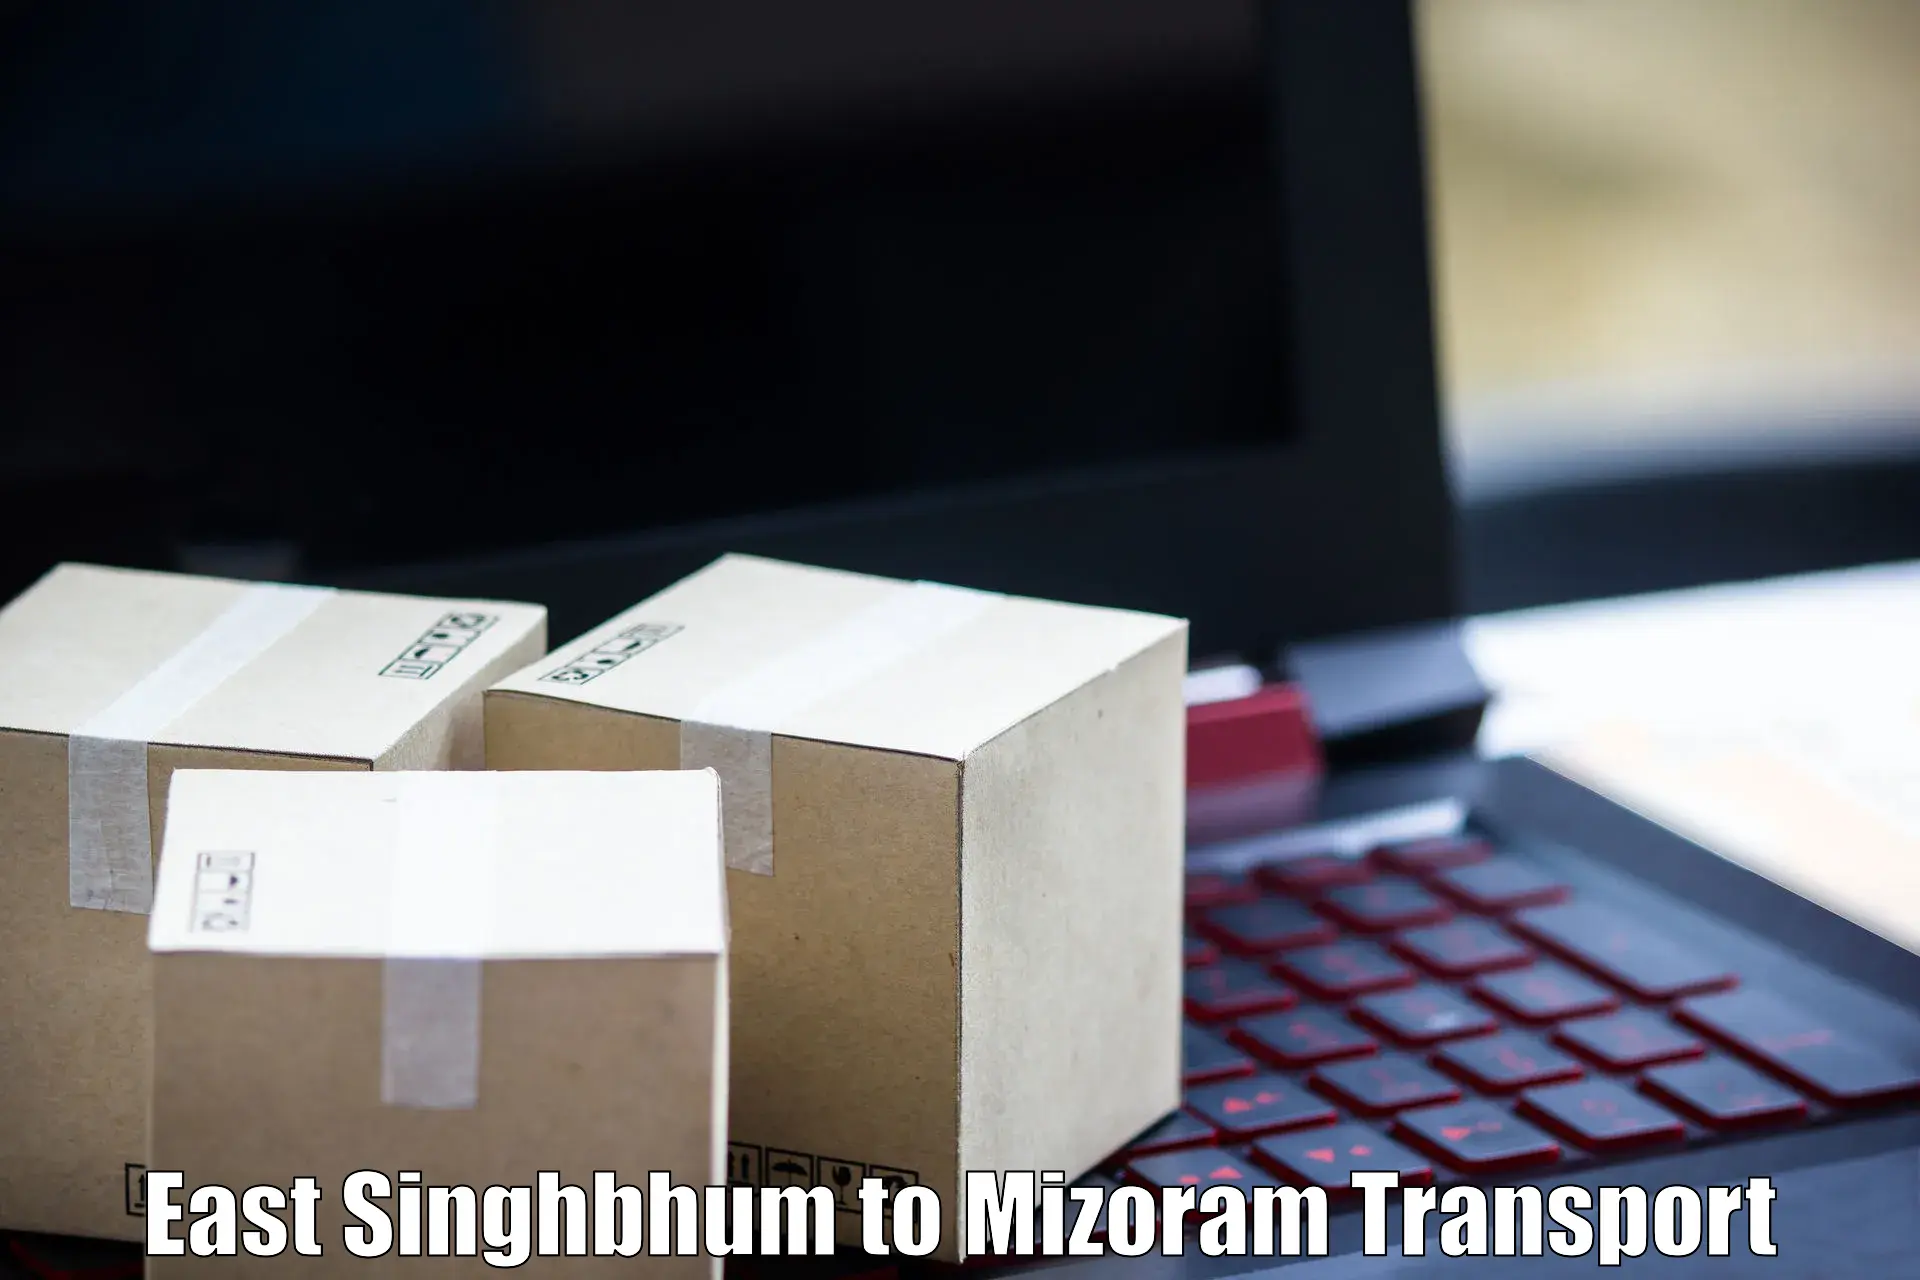 Shipping partner East Singhbhum to Mizoram